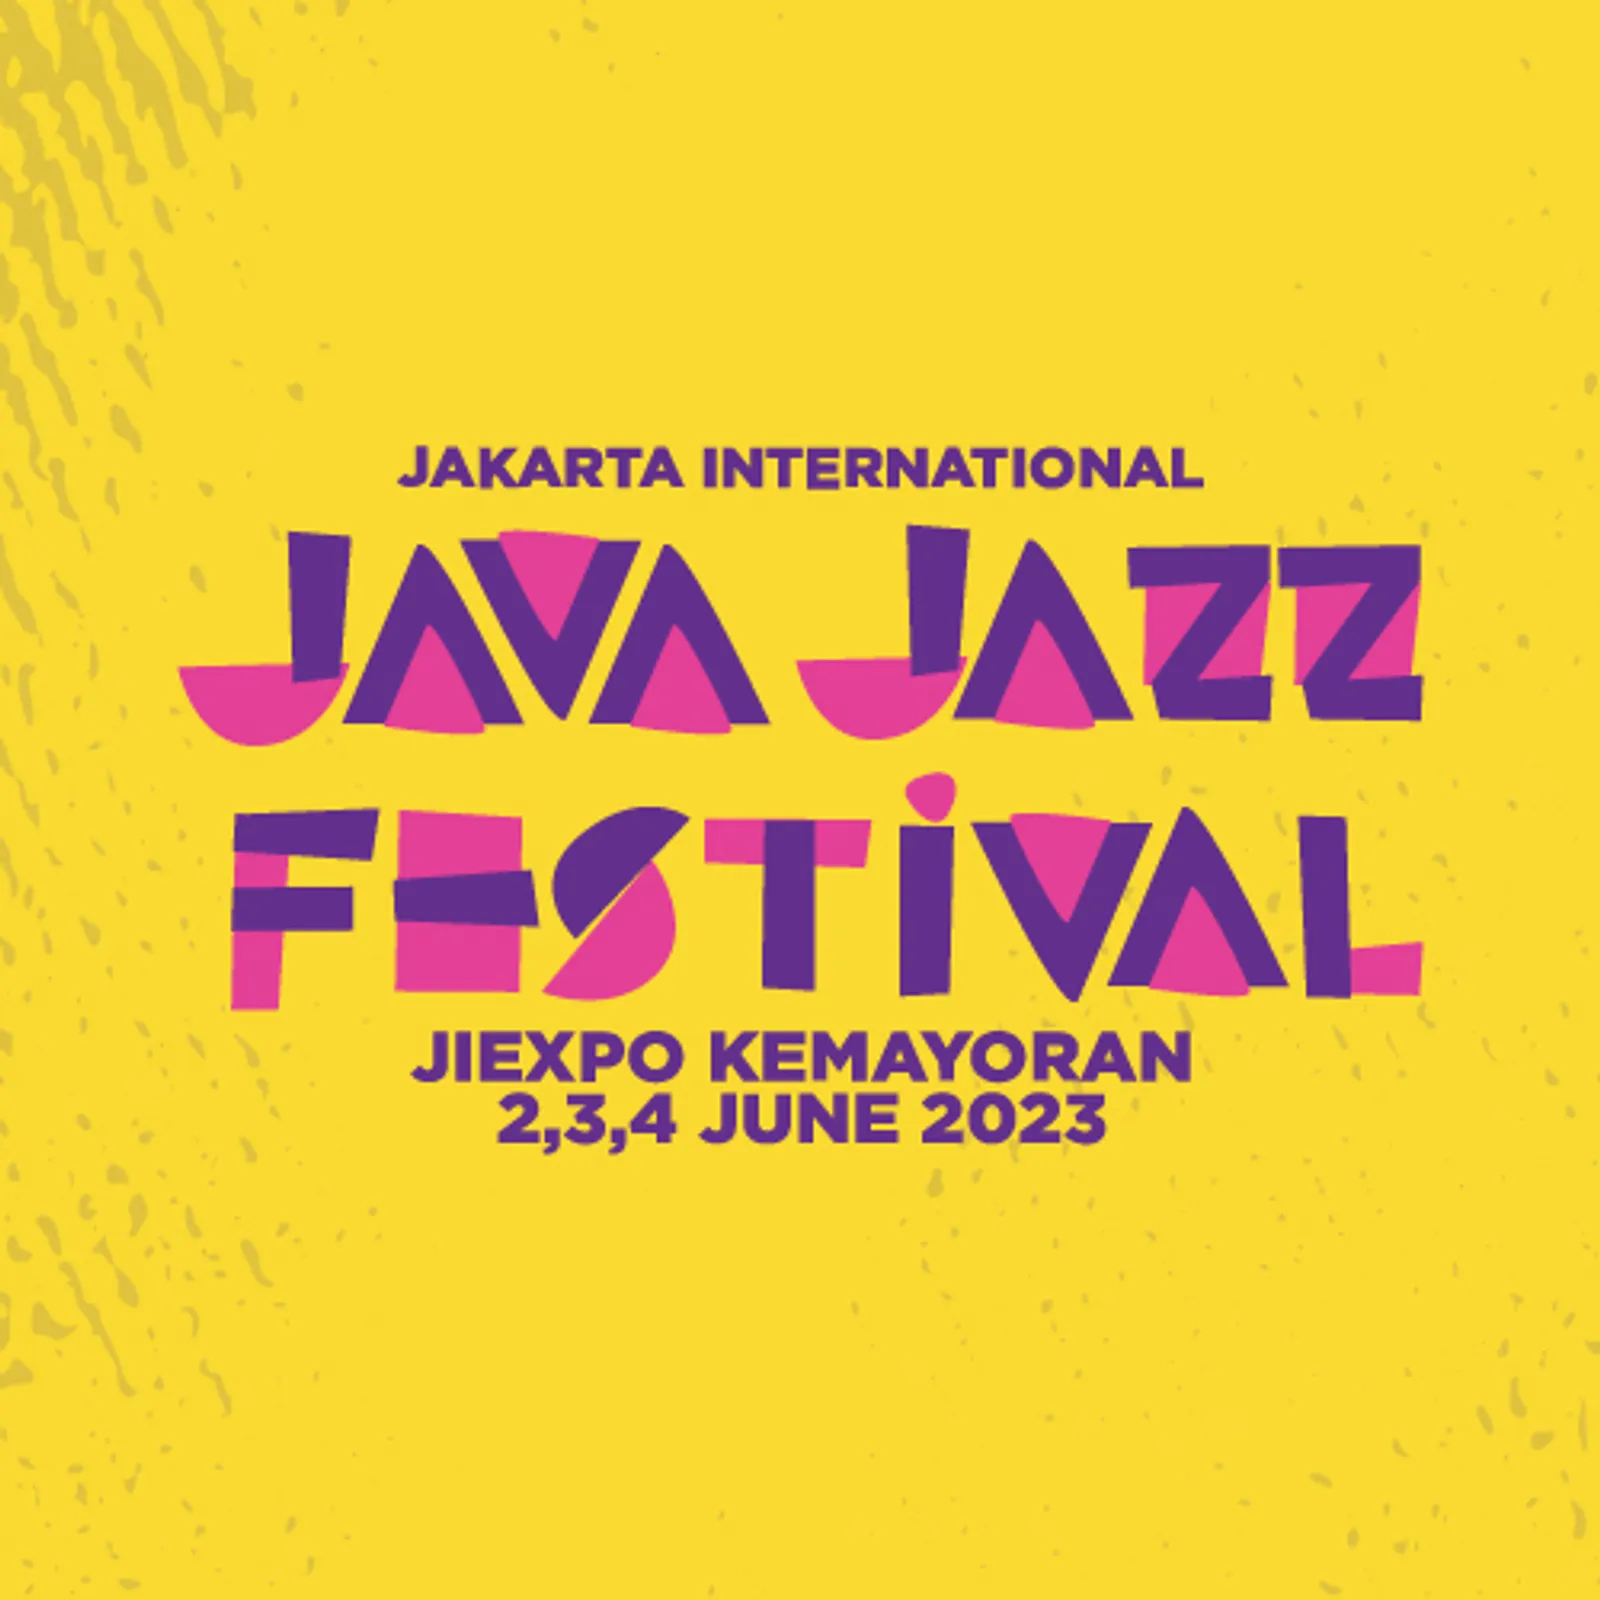 Jakarta International Java Jazz Festival Siap Digelar, Ini Tanggalnya!